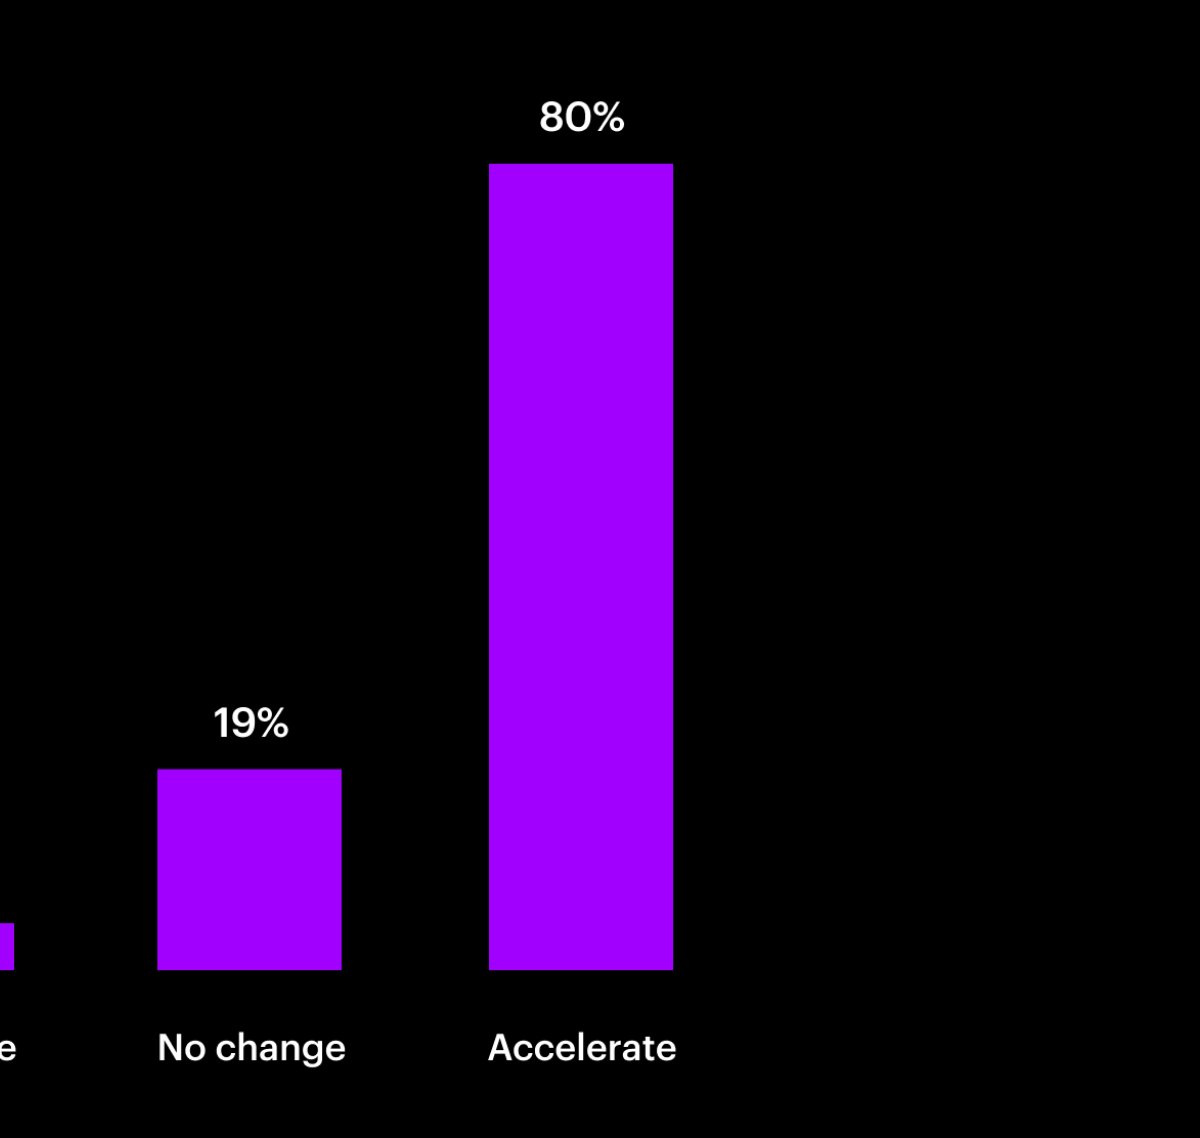 Decelerate = 2%, No Change = 19%, Accelerate = 80%